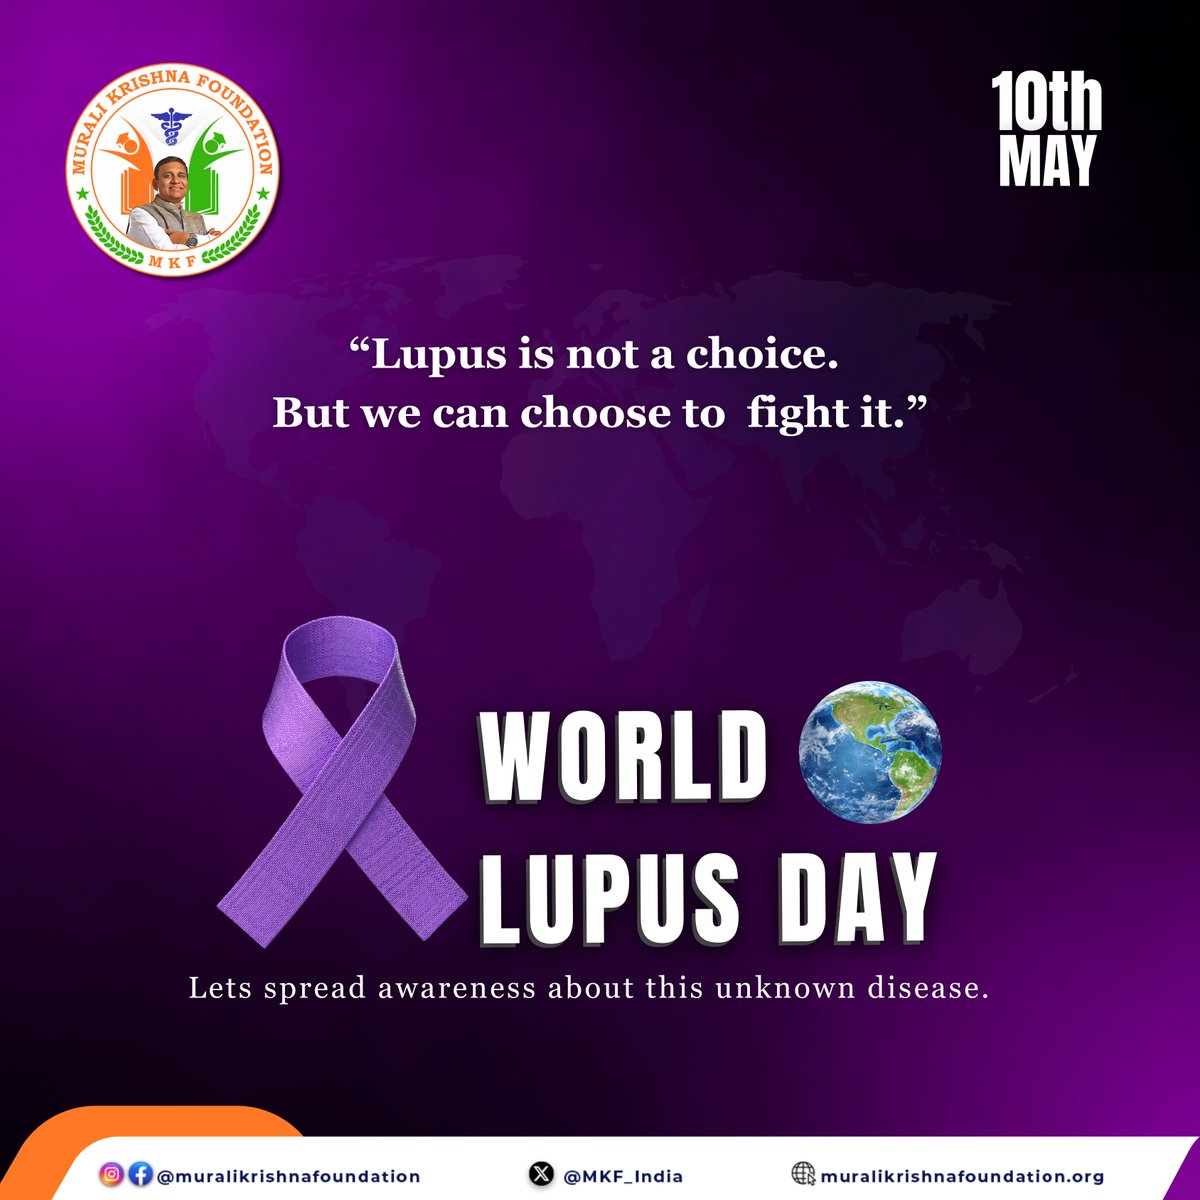 On World Lupus Day, let's raise awareness and support for those battling this autoimmune disease.

#muralikrishnafoundation #dmuralikrishna #mkf #MKFoundation #Bargarh #Odisha #worldlupusday #Lupus